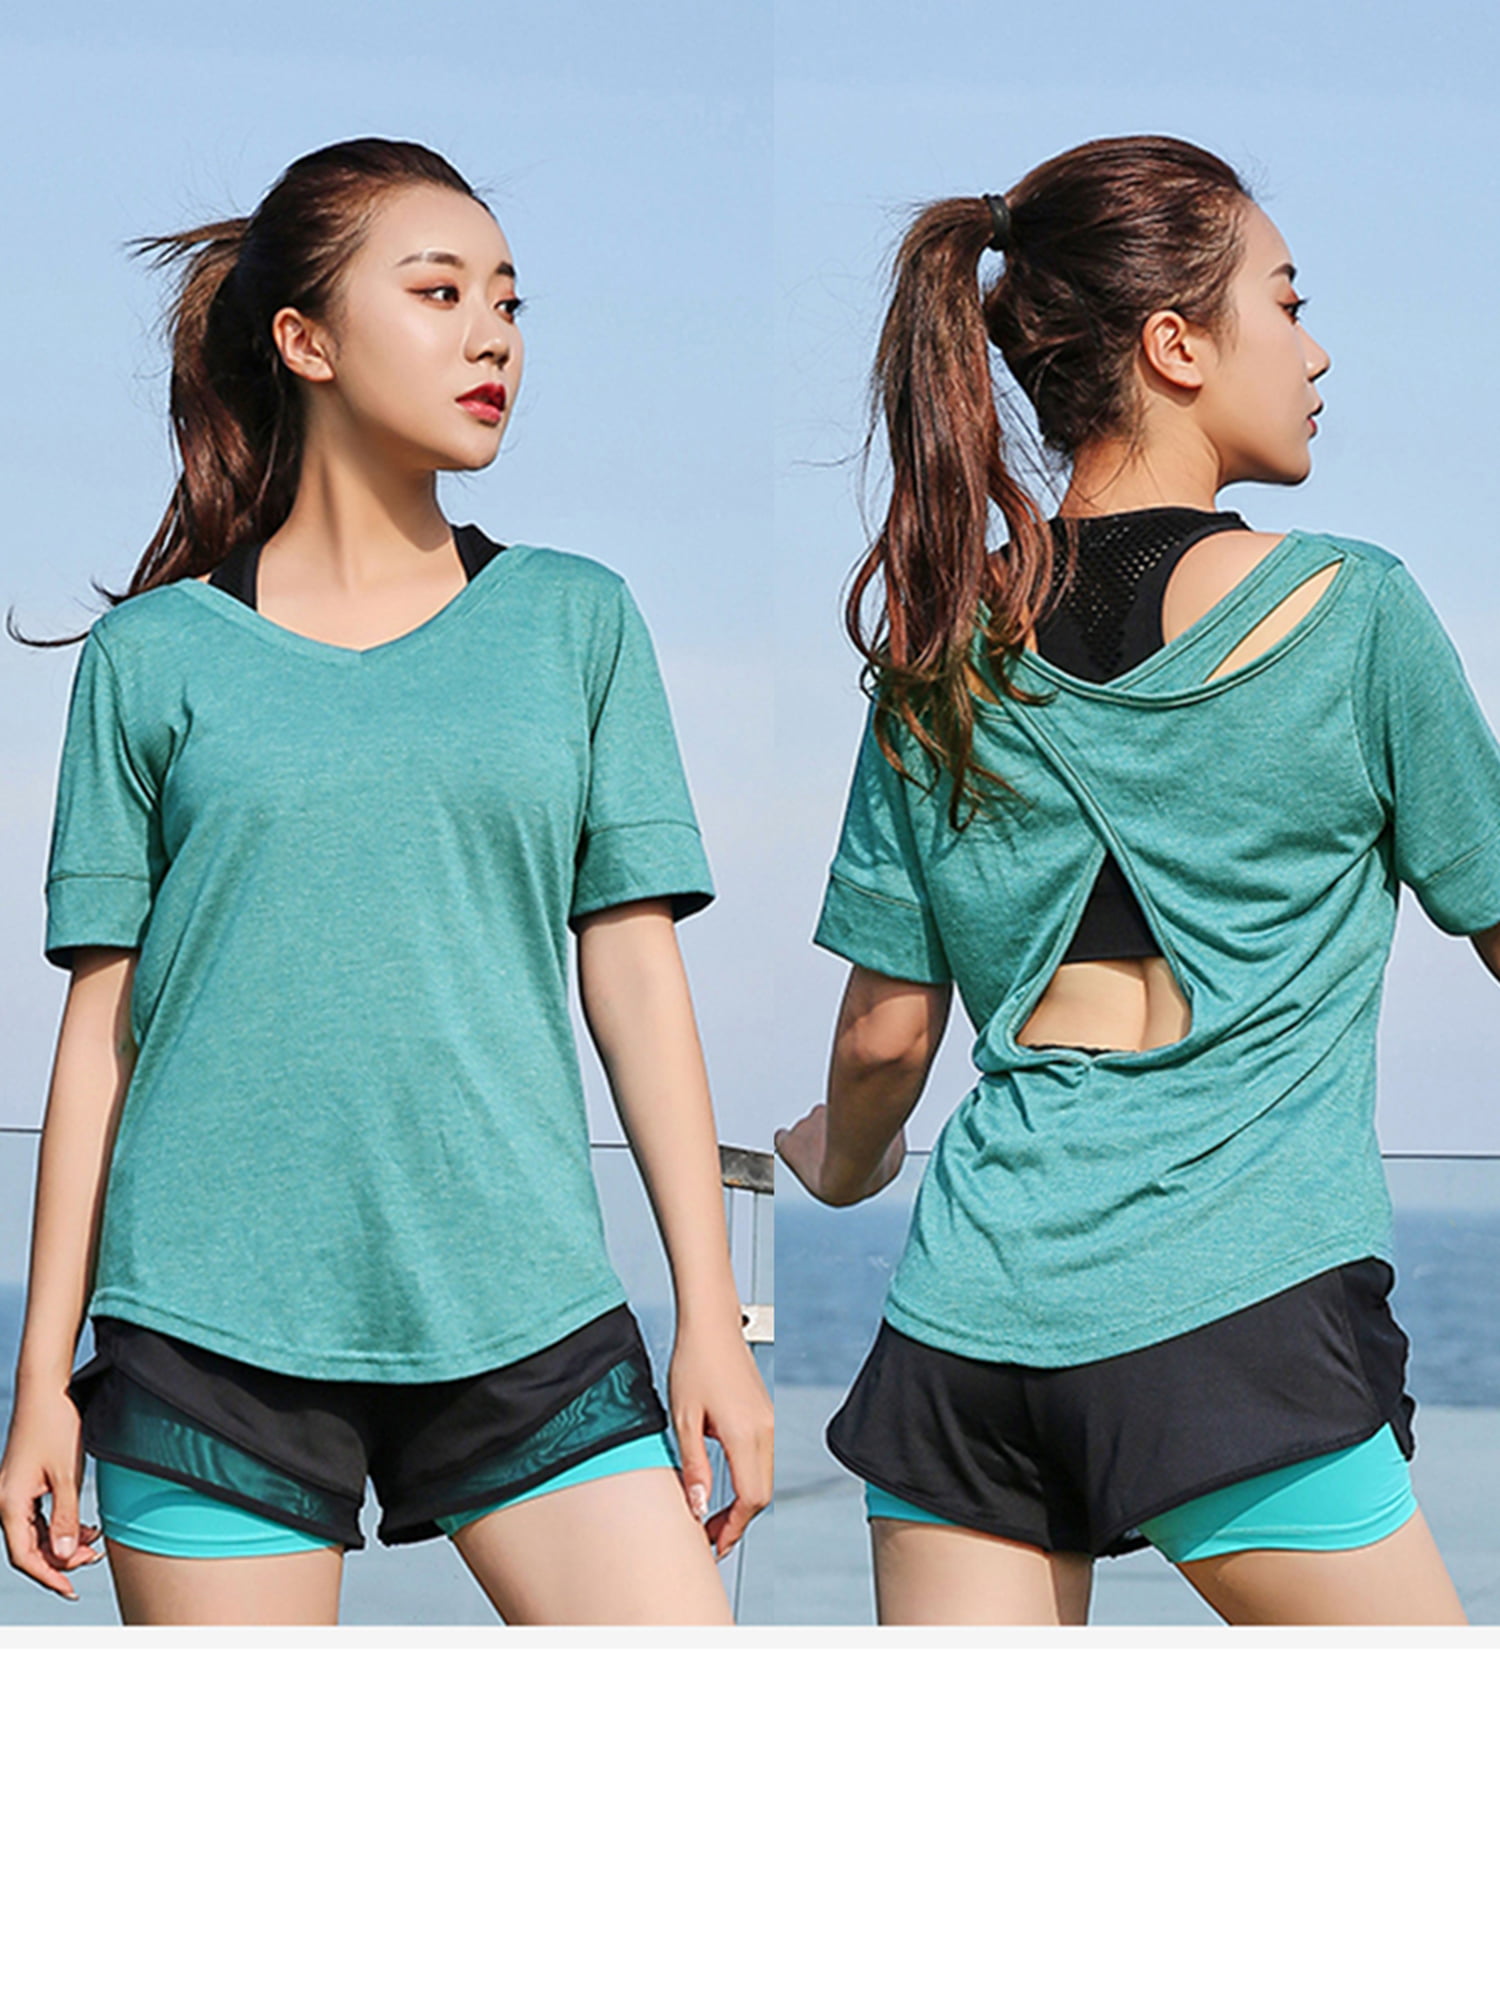 OMANTIC Womens Short Sleeve Running Athletic Sun Shirts Workout Yoga Tops Plain T-Shirt Hiking Fishing 